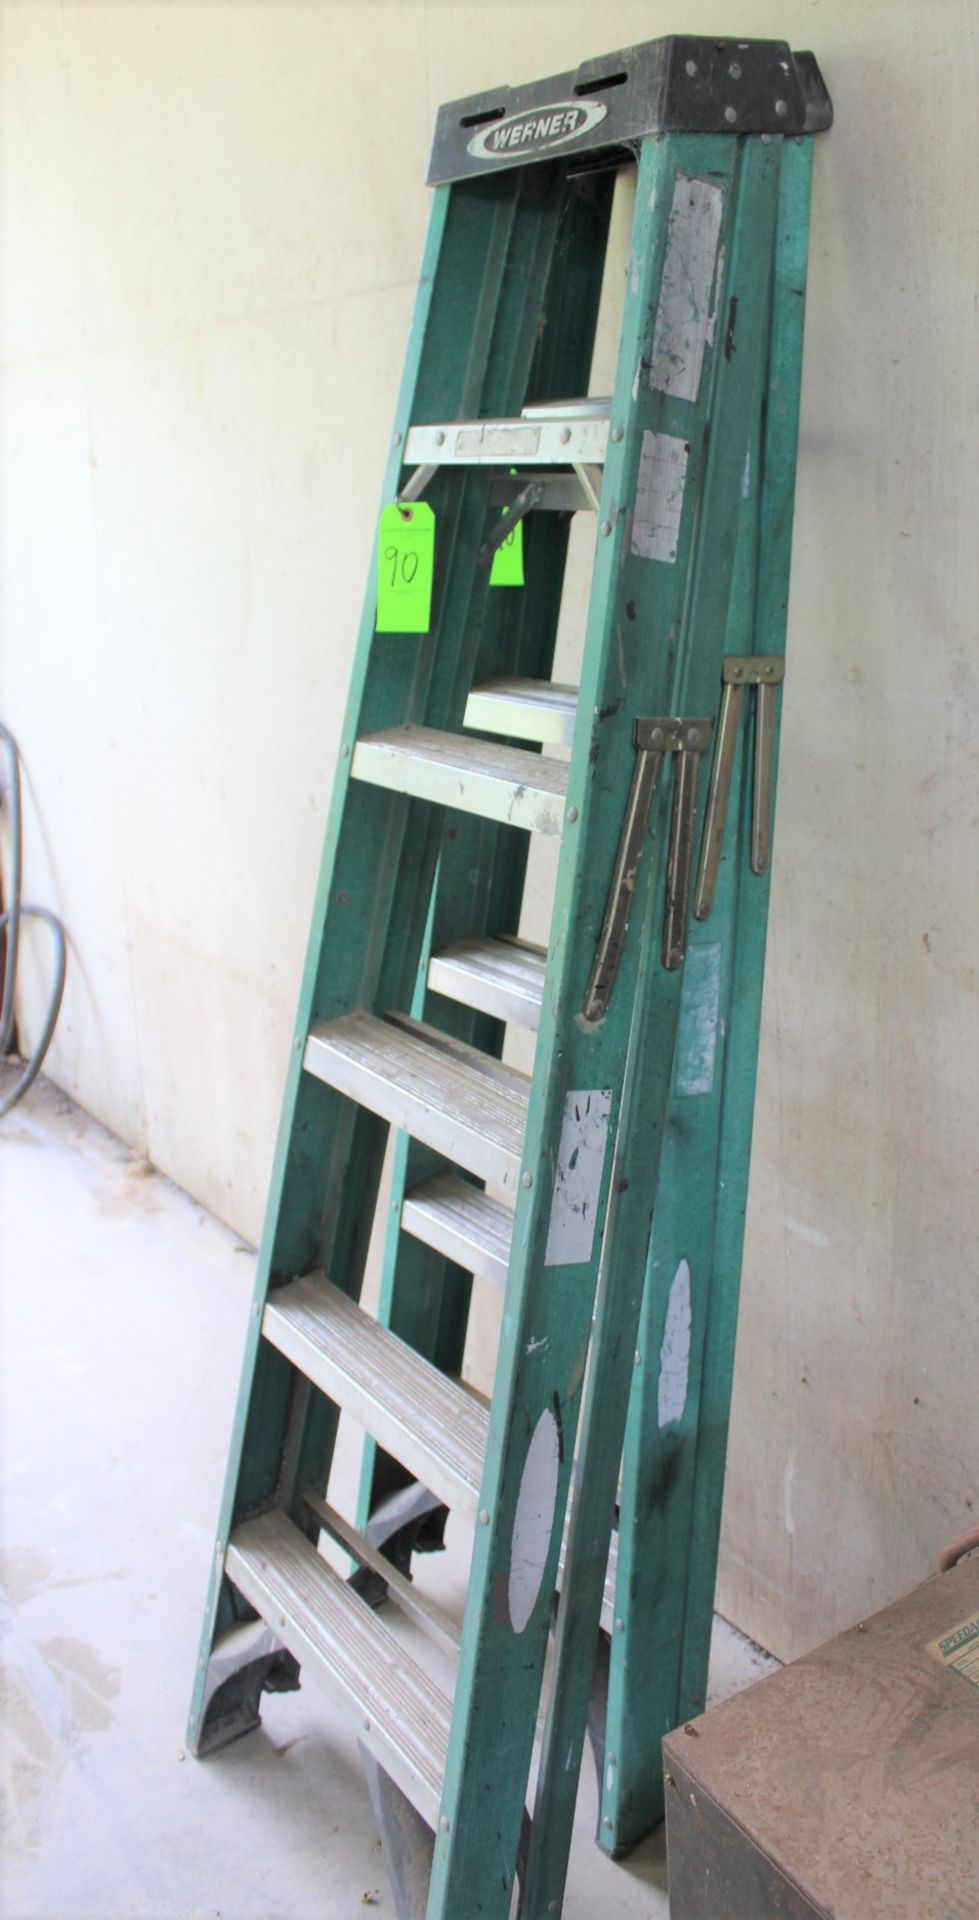 (2) Werner 5' Fiberglass Ladders